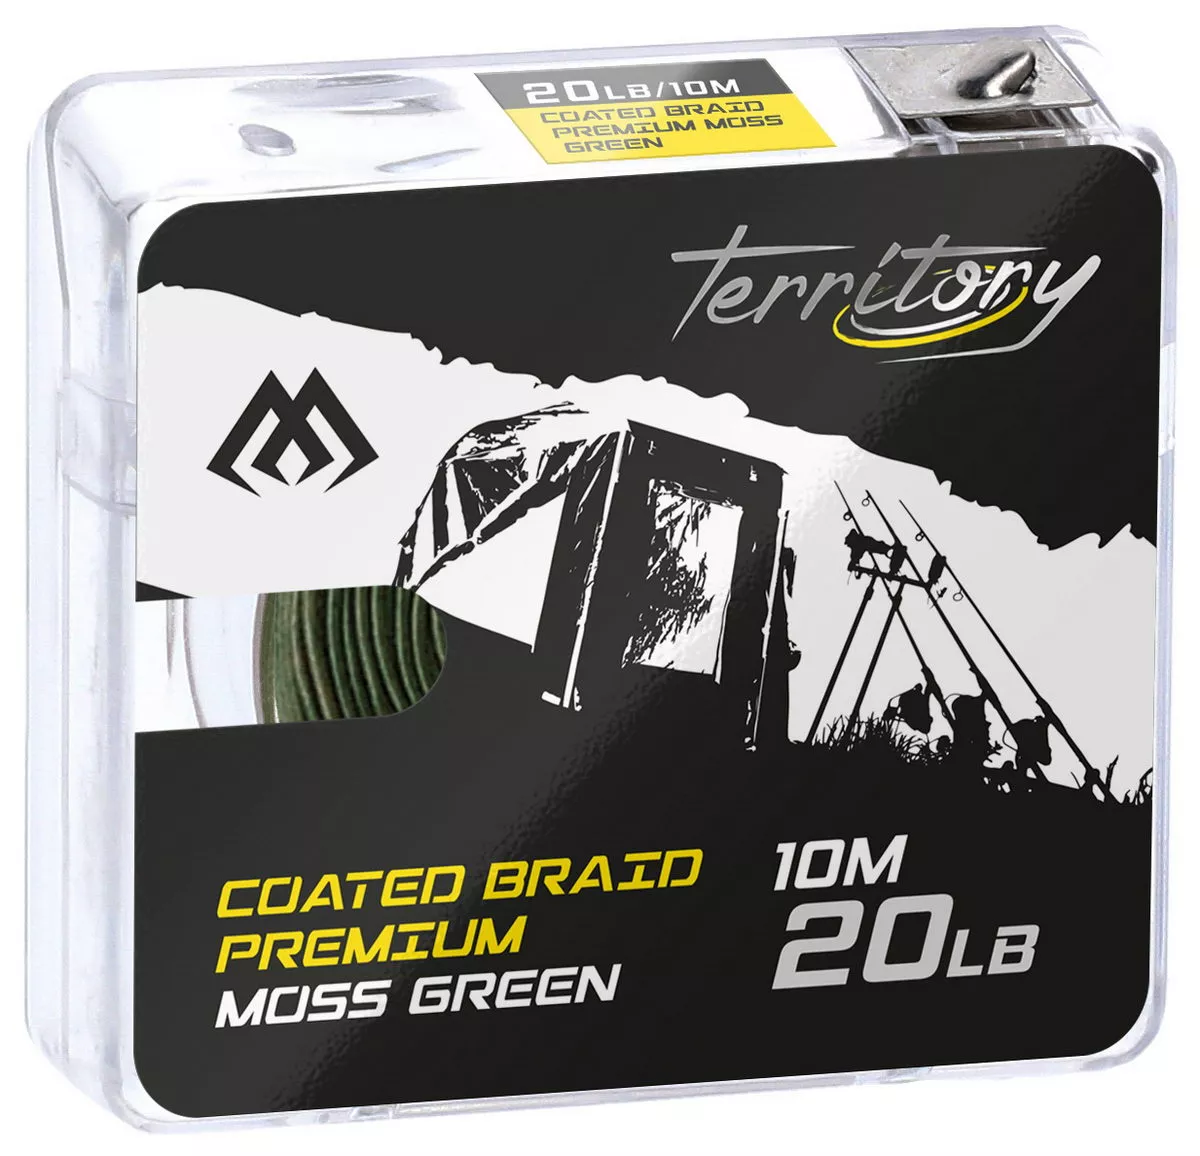 MIKADO Coated Braid Premium - Moosgrün 20Lbs/10M - 1st